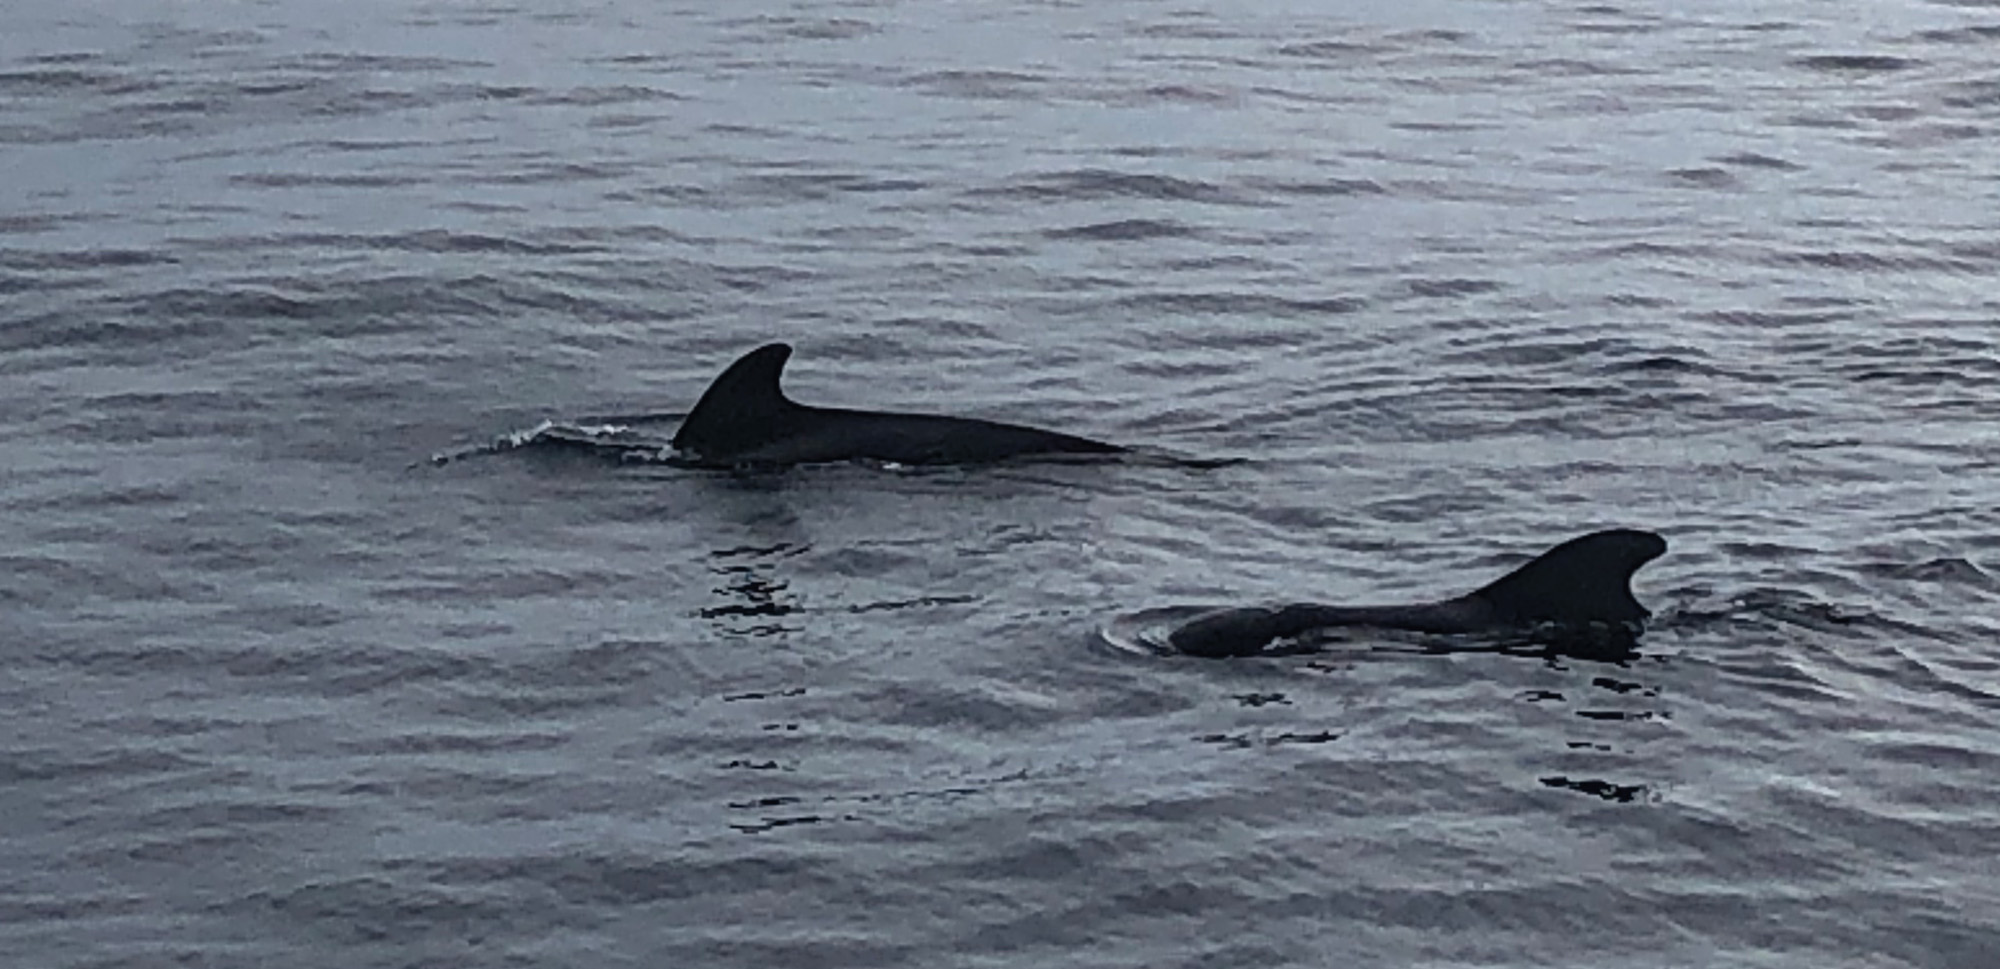 Dolphins in ocean